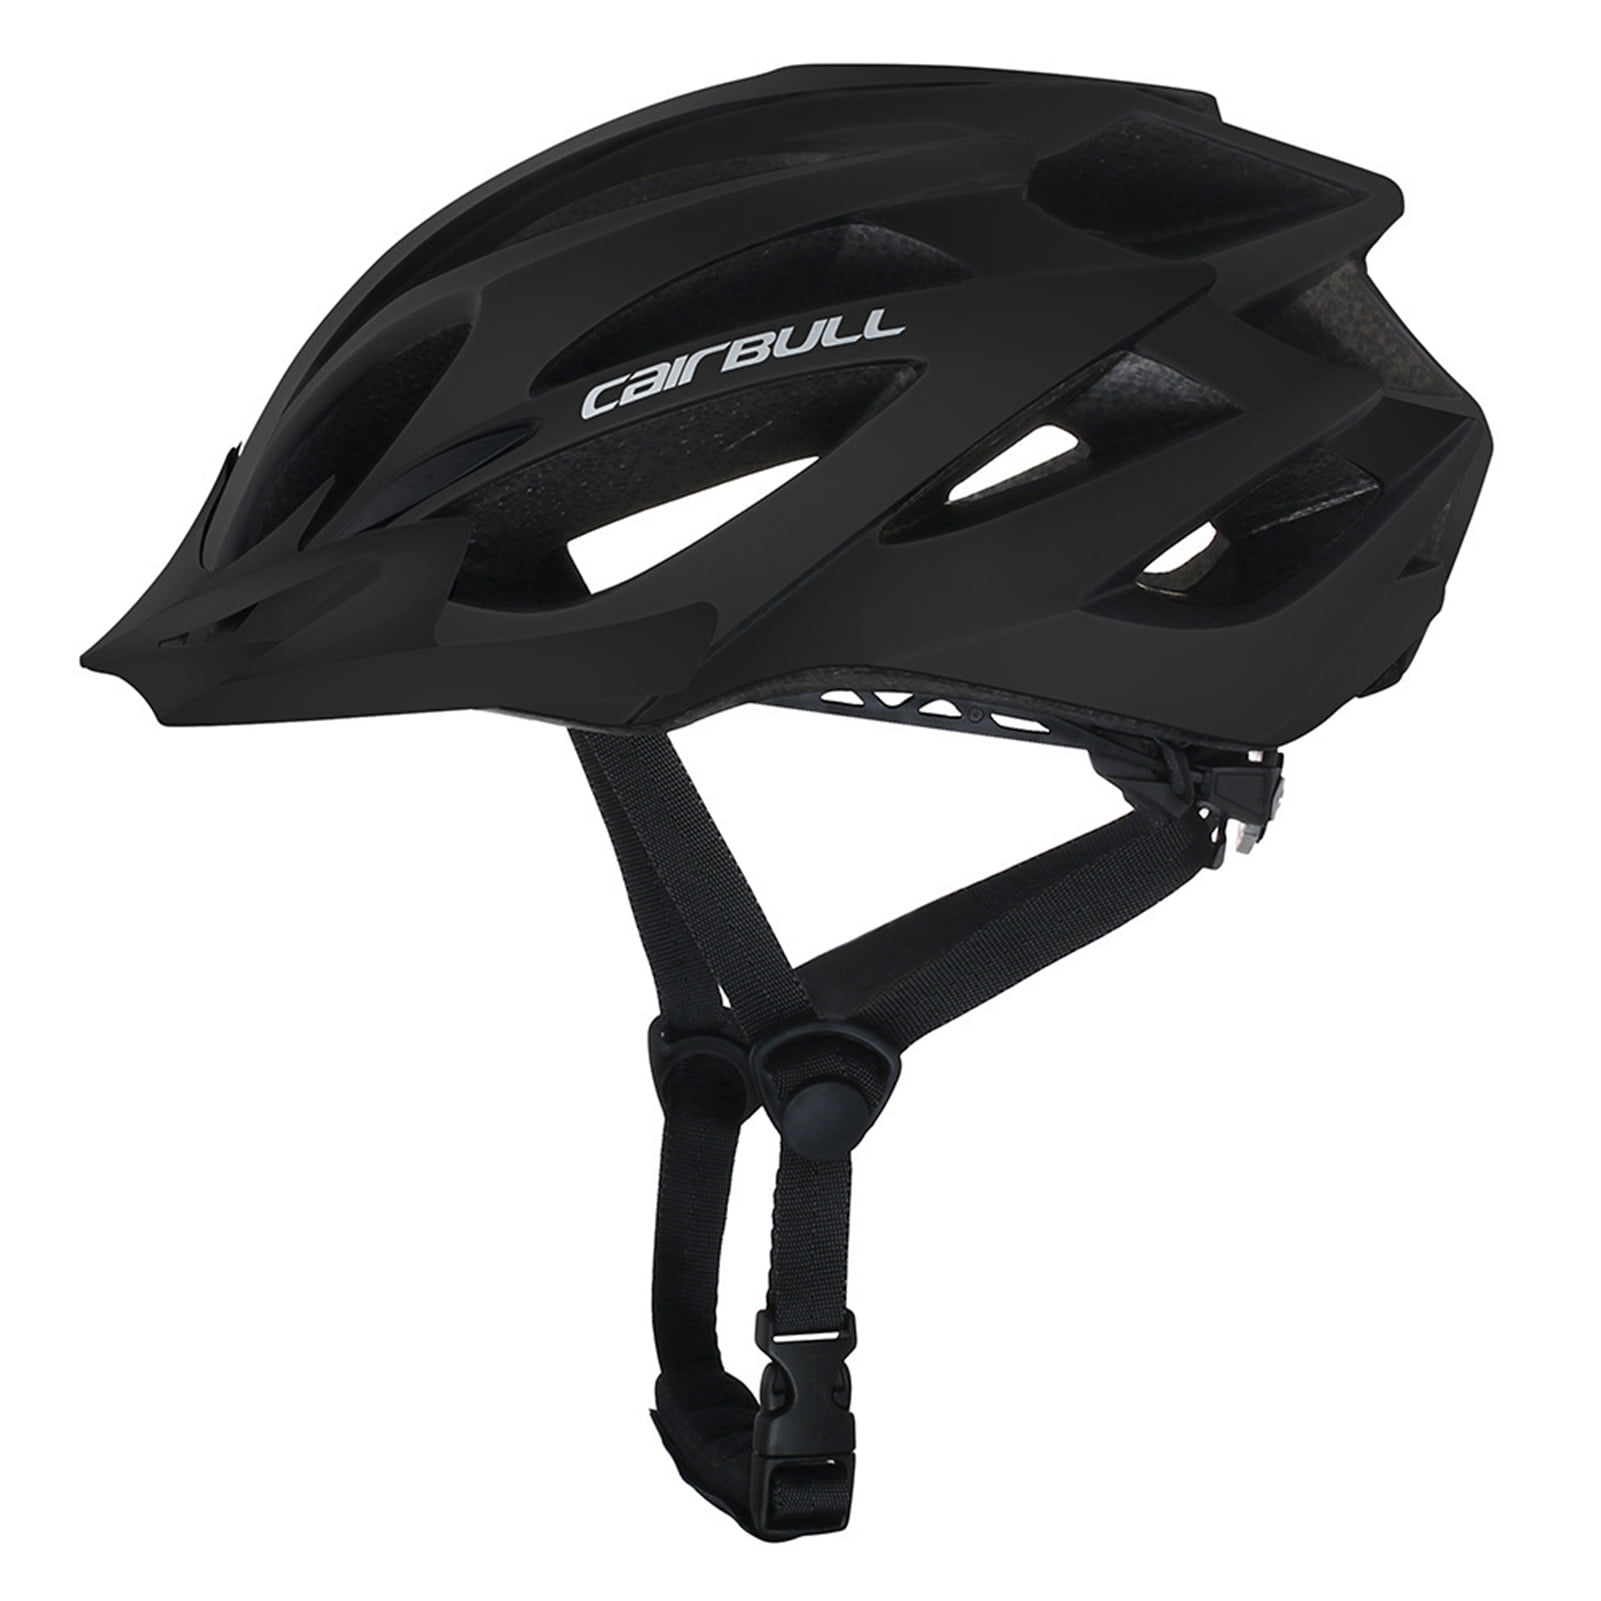 Cycling Helmet Superlight 21 Vents Breathable MTB Mountain Bike Road G7K0 